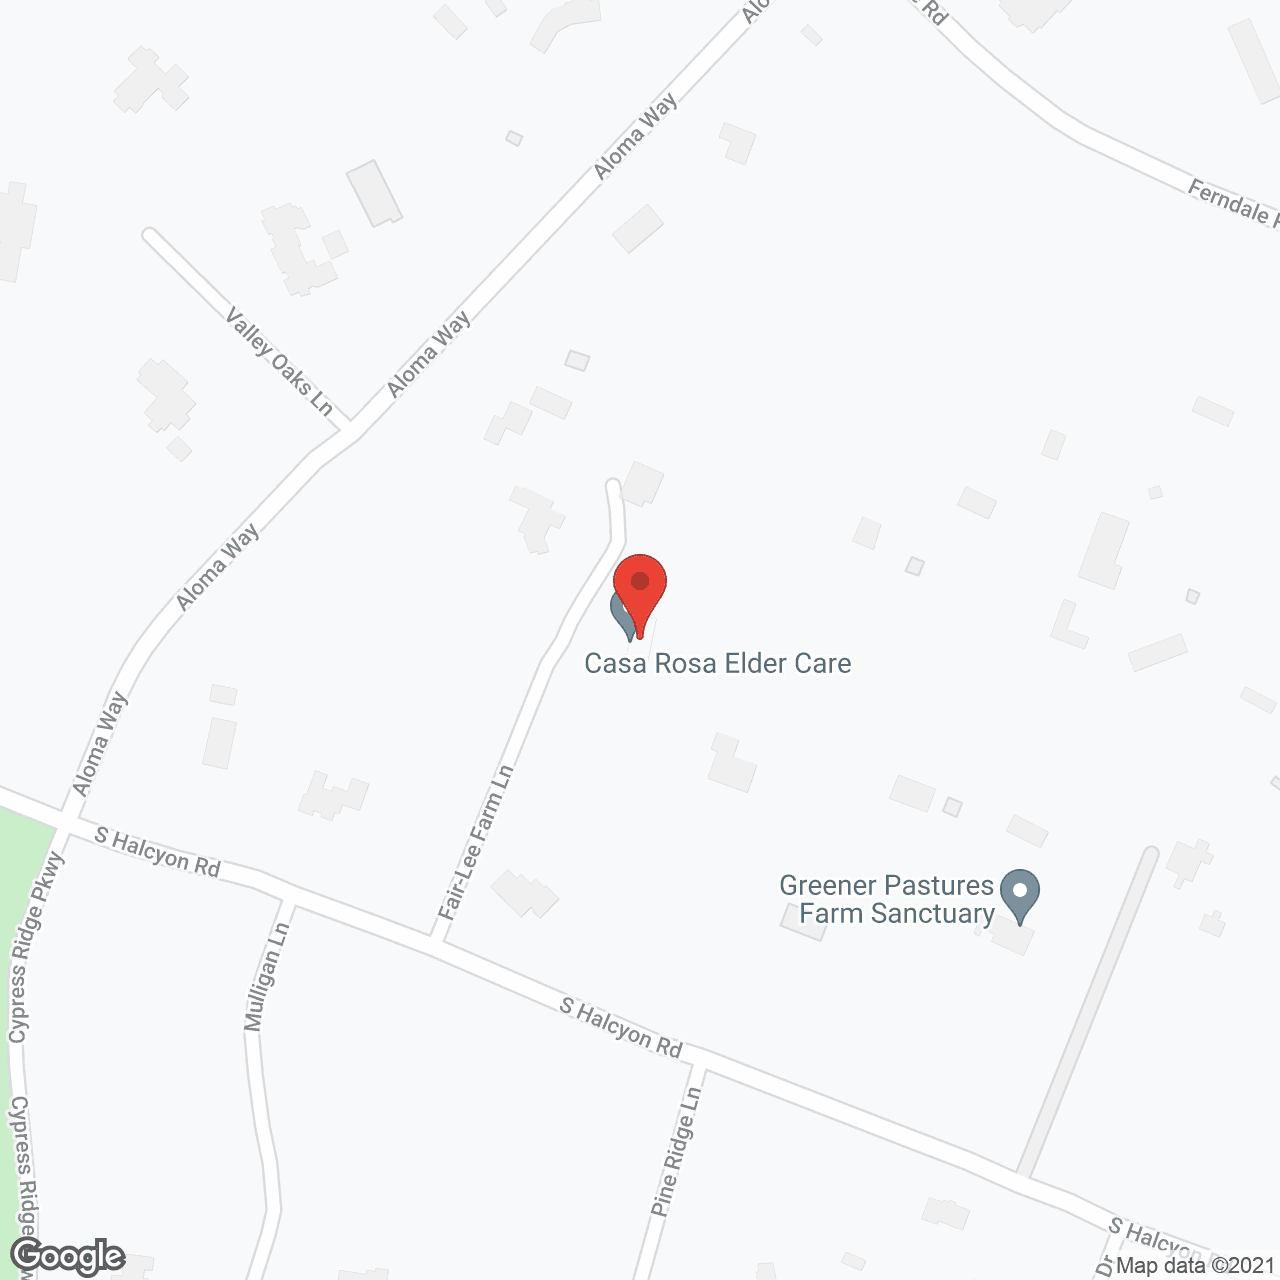 Casa Rosa Elder Care in google map